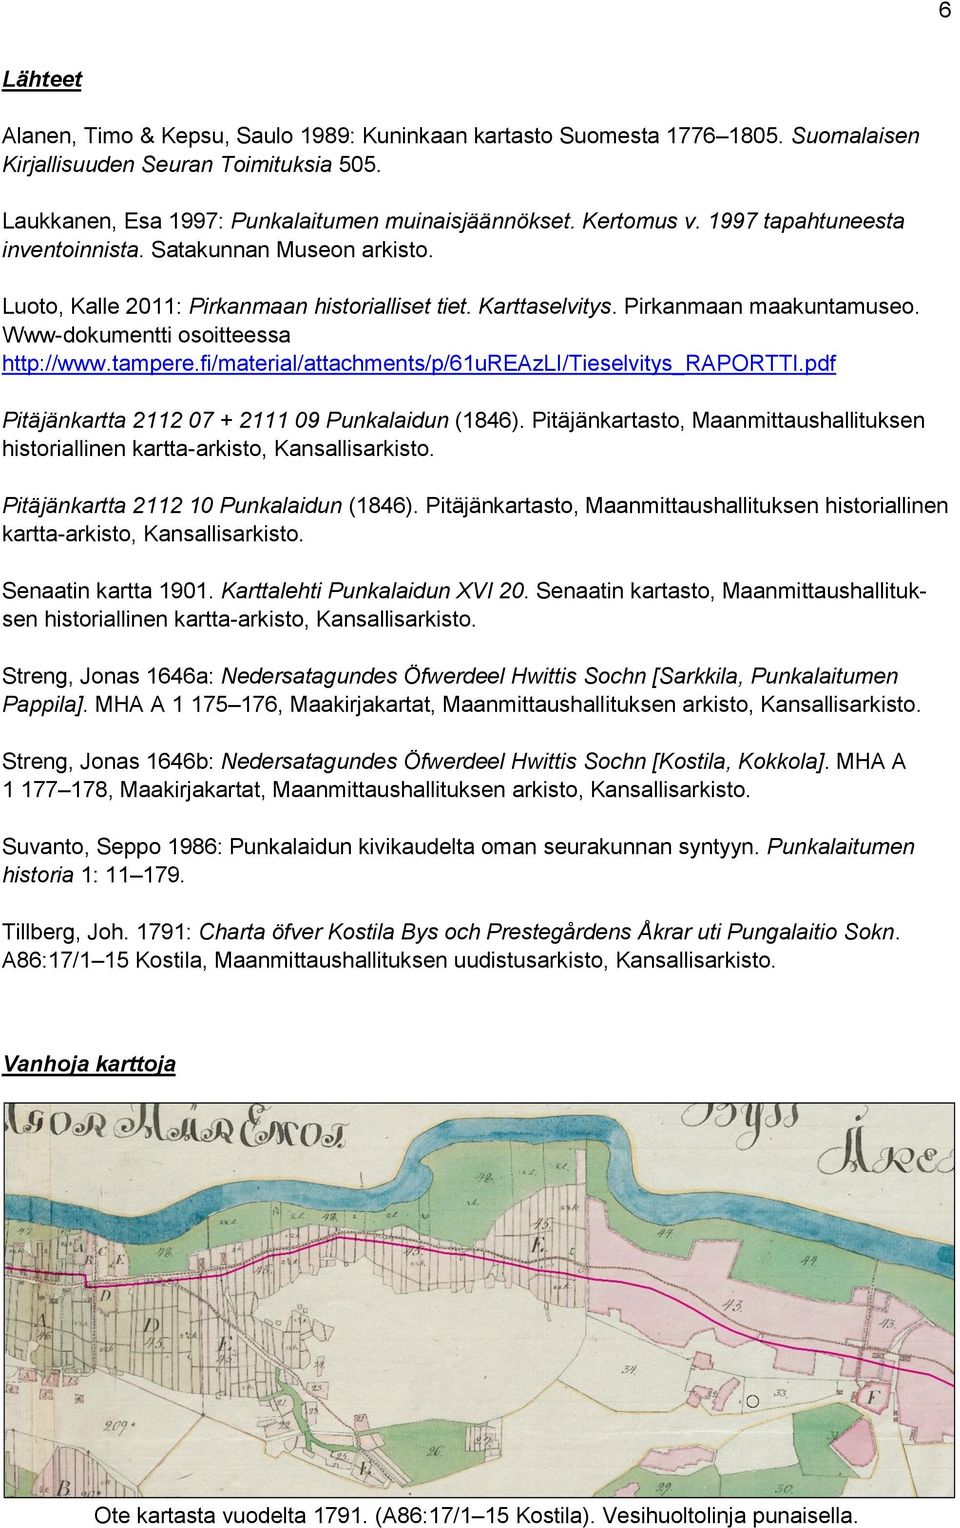 tampere.fi/material/attachments/p/61ureazli/tieselvitys_raportti.pdf Pitäjänkartta 2112 07 + 2111 09 Punkalaidun (1846).